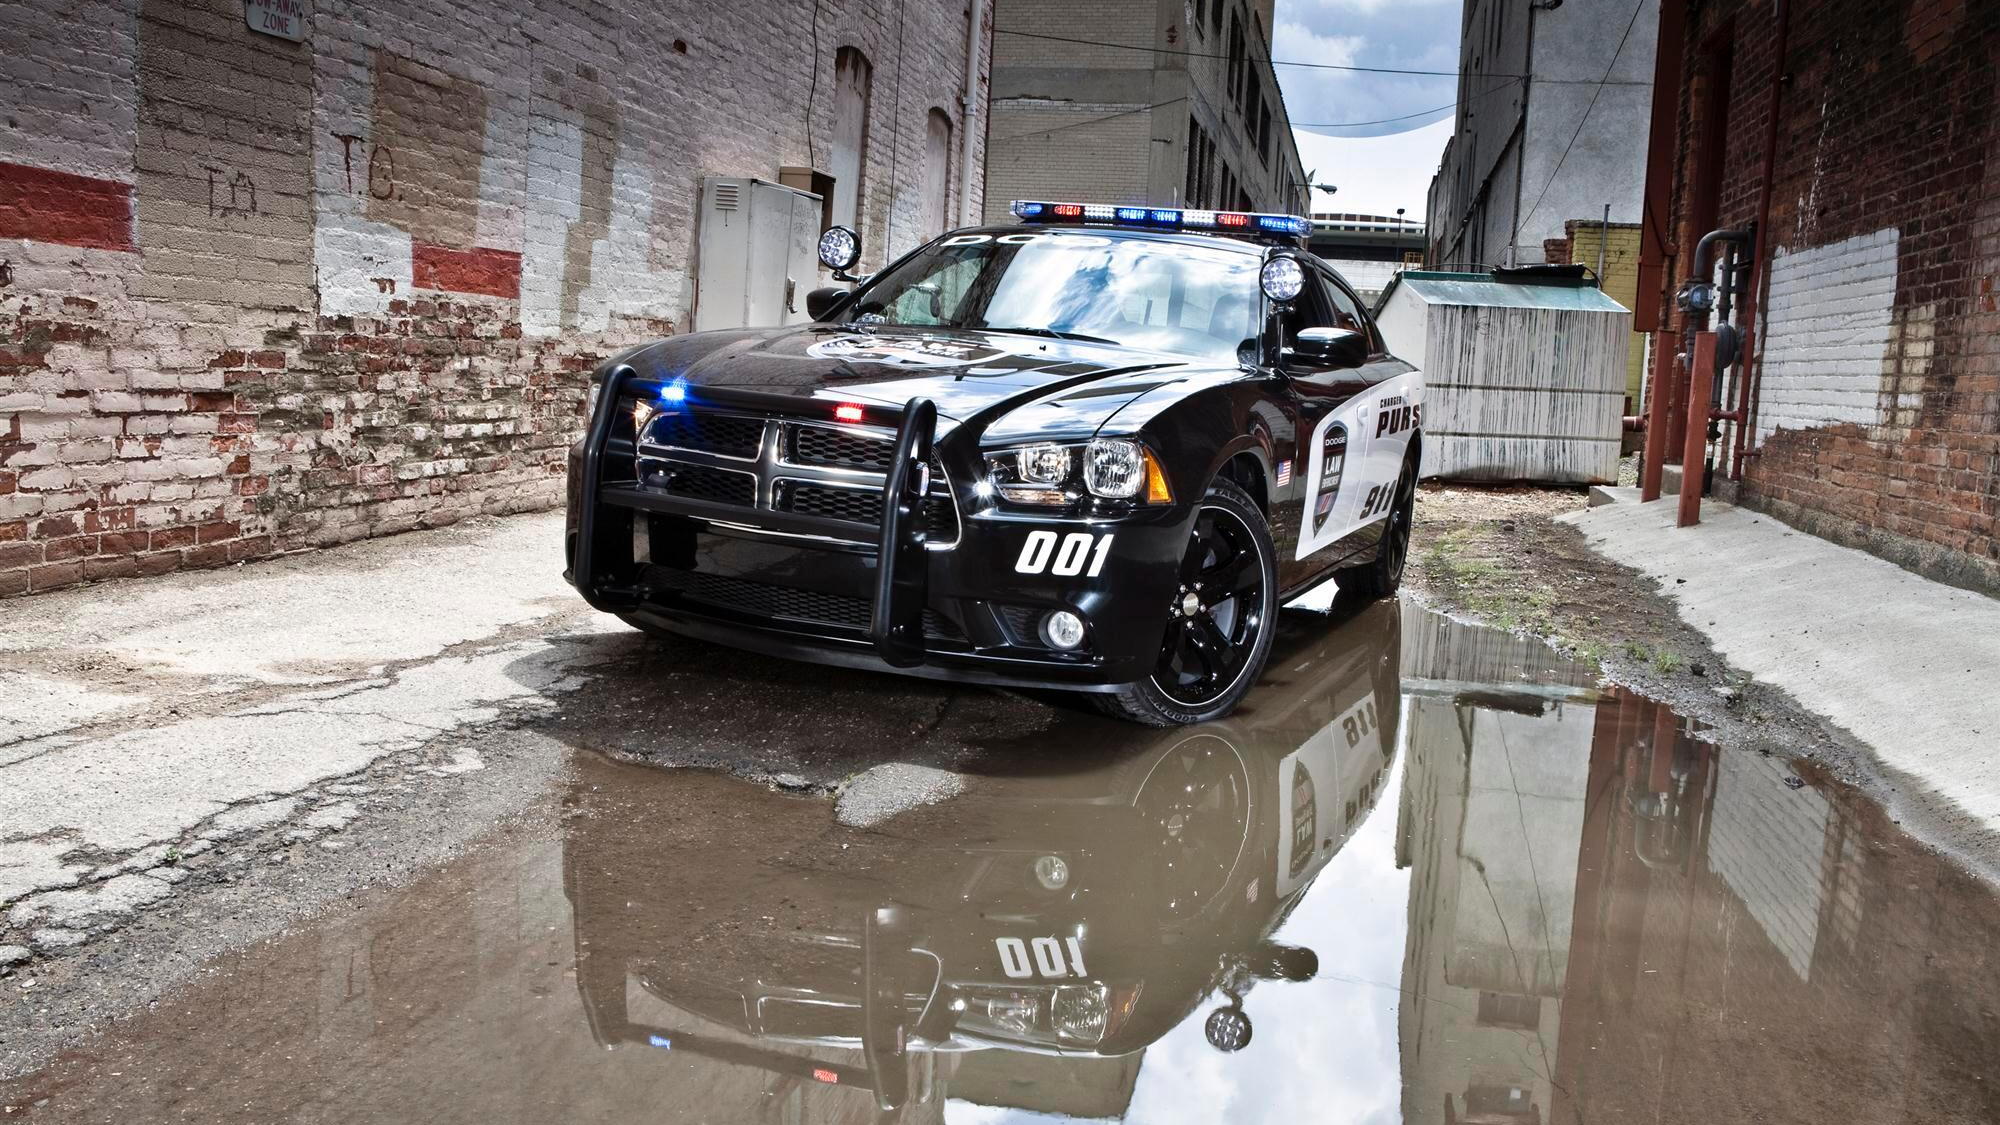 2012 Dodge Charger Pursuit police car